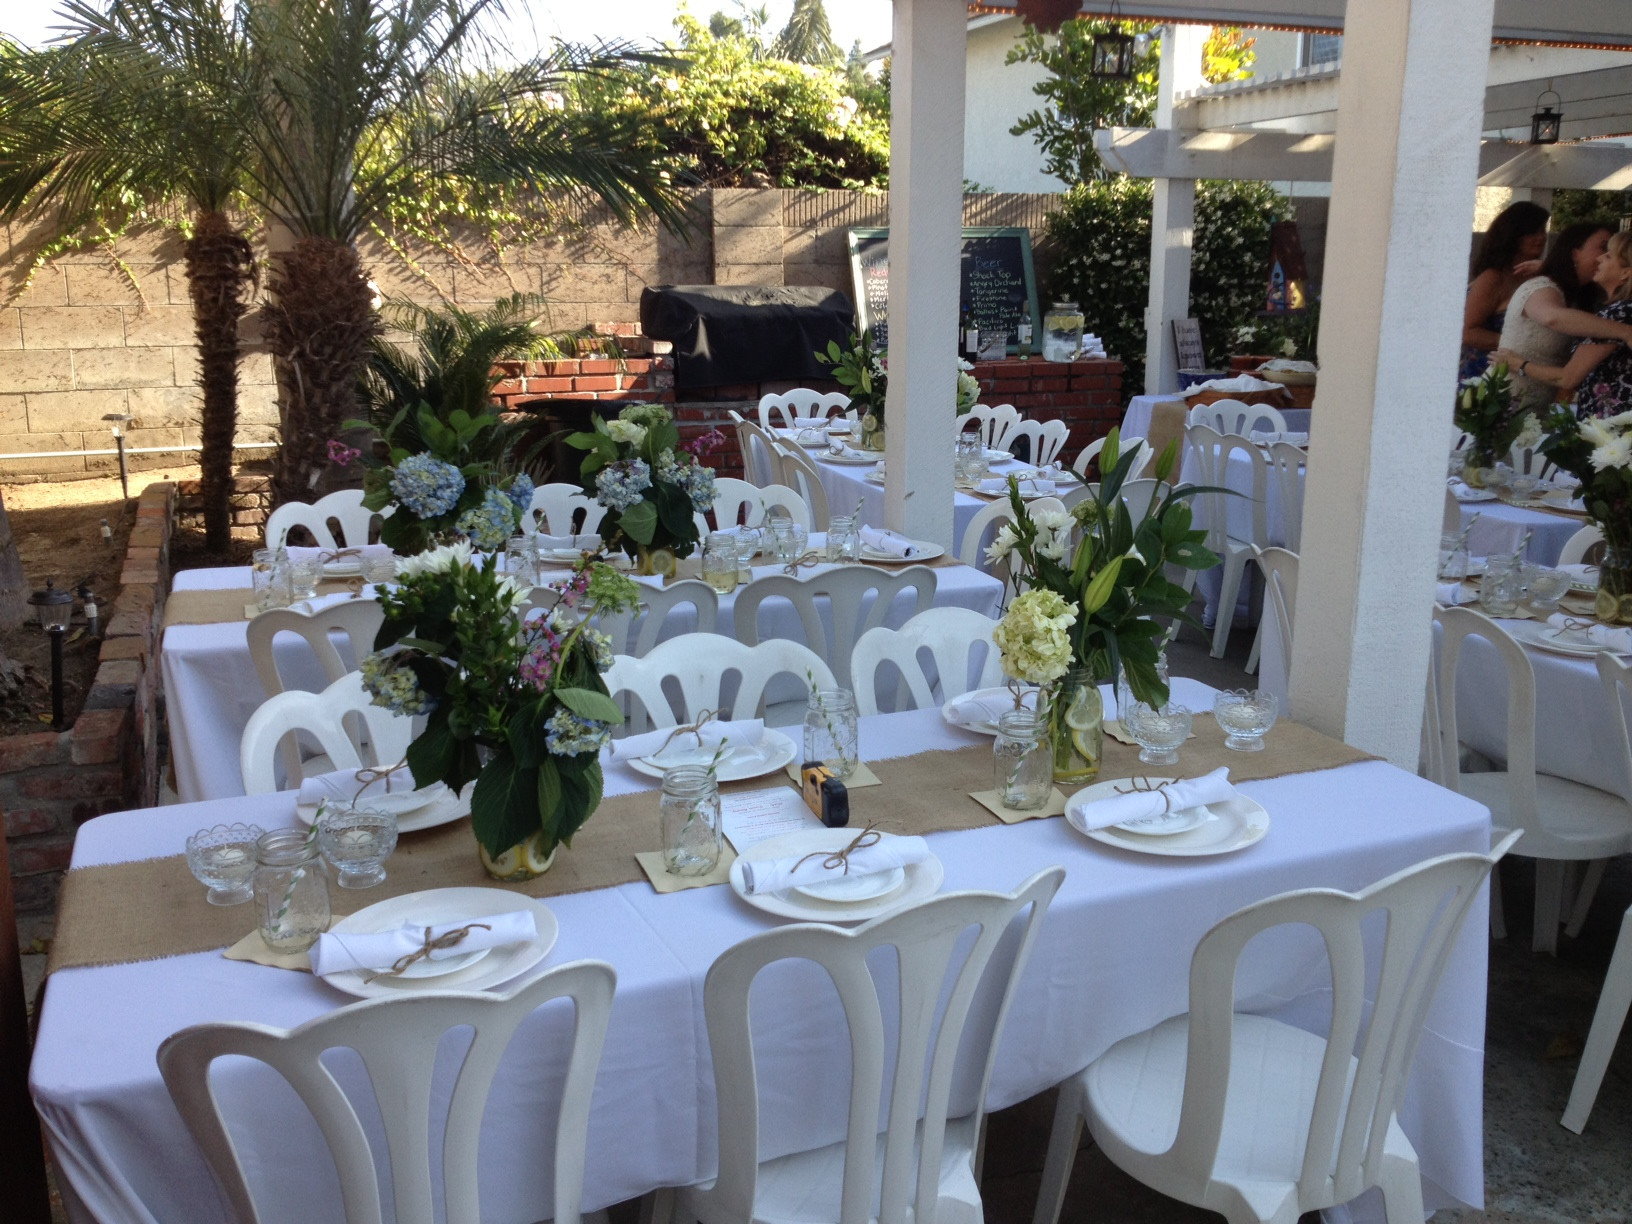 Best ideas about DIY Wedding Reception Decoration
. Save or Pin Backyard DIY Wedding Reception Now.